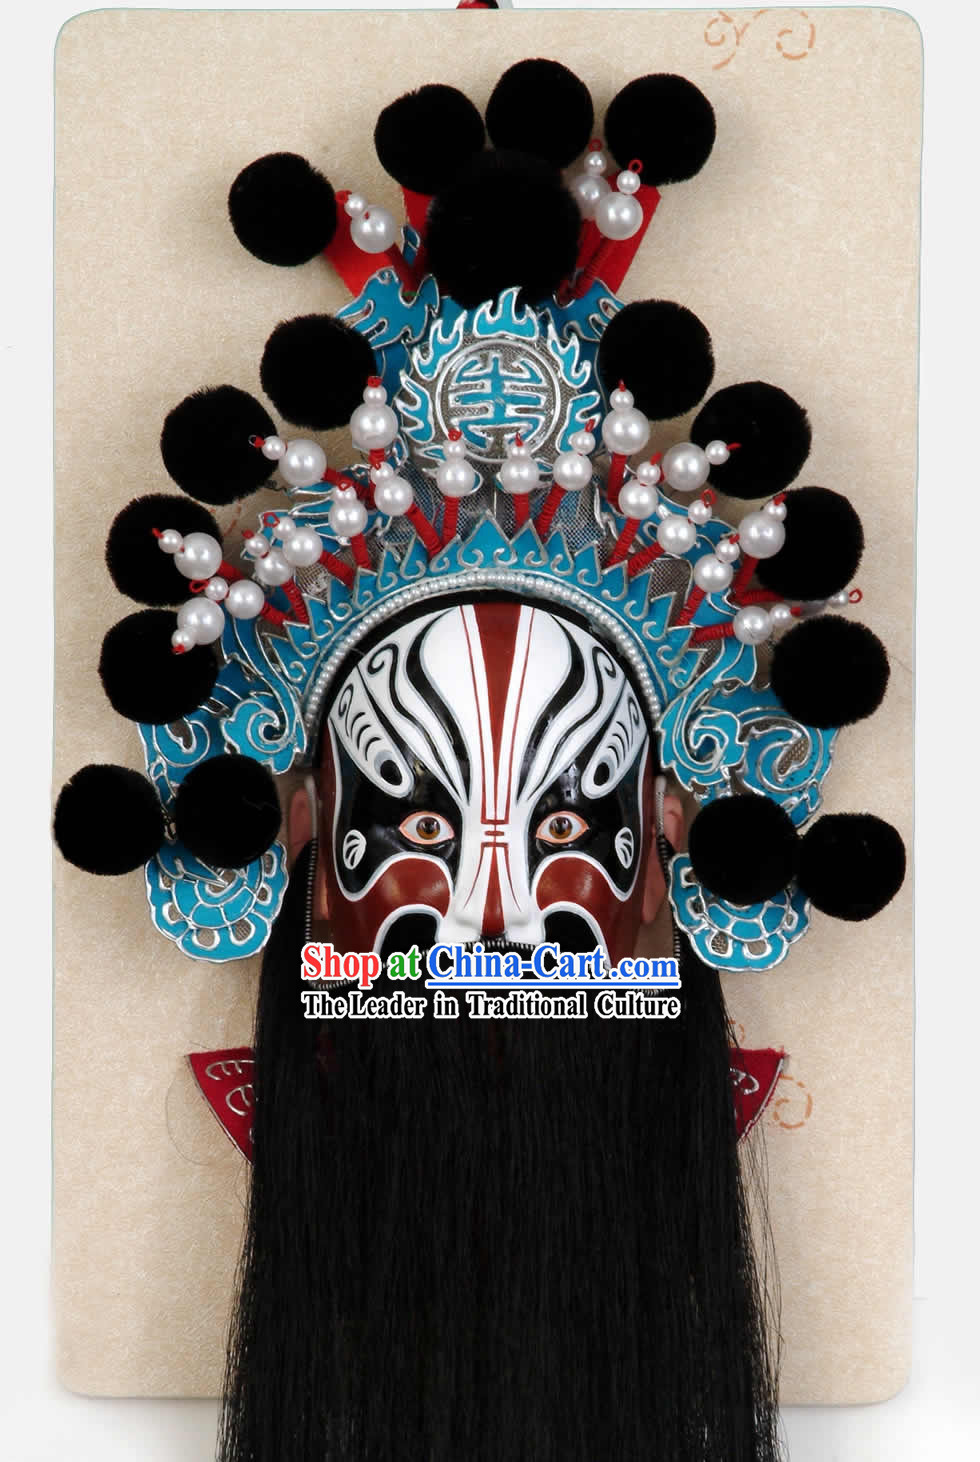 Handcrafted Peking Opera Mask Hanging Decoration - Wei Yan